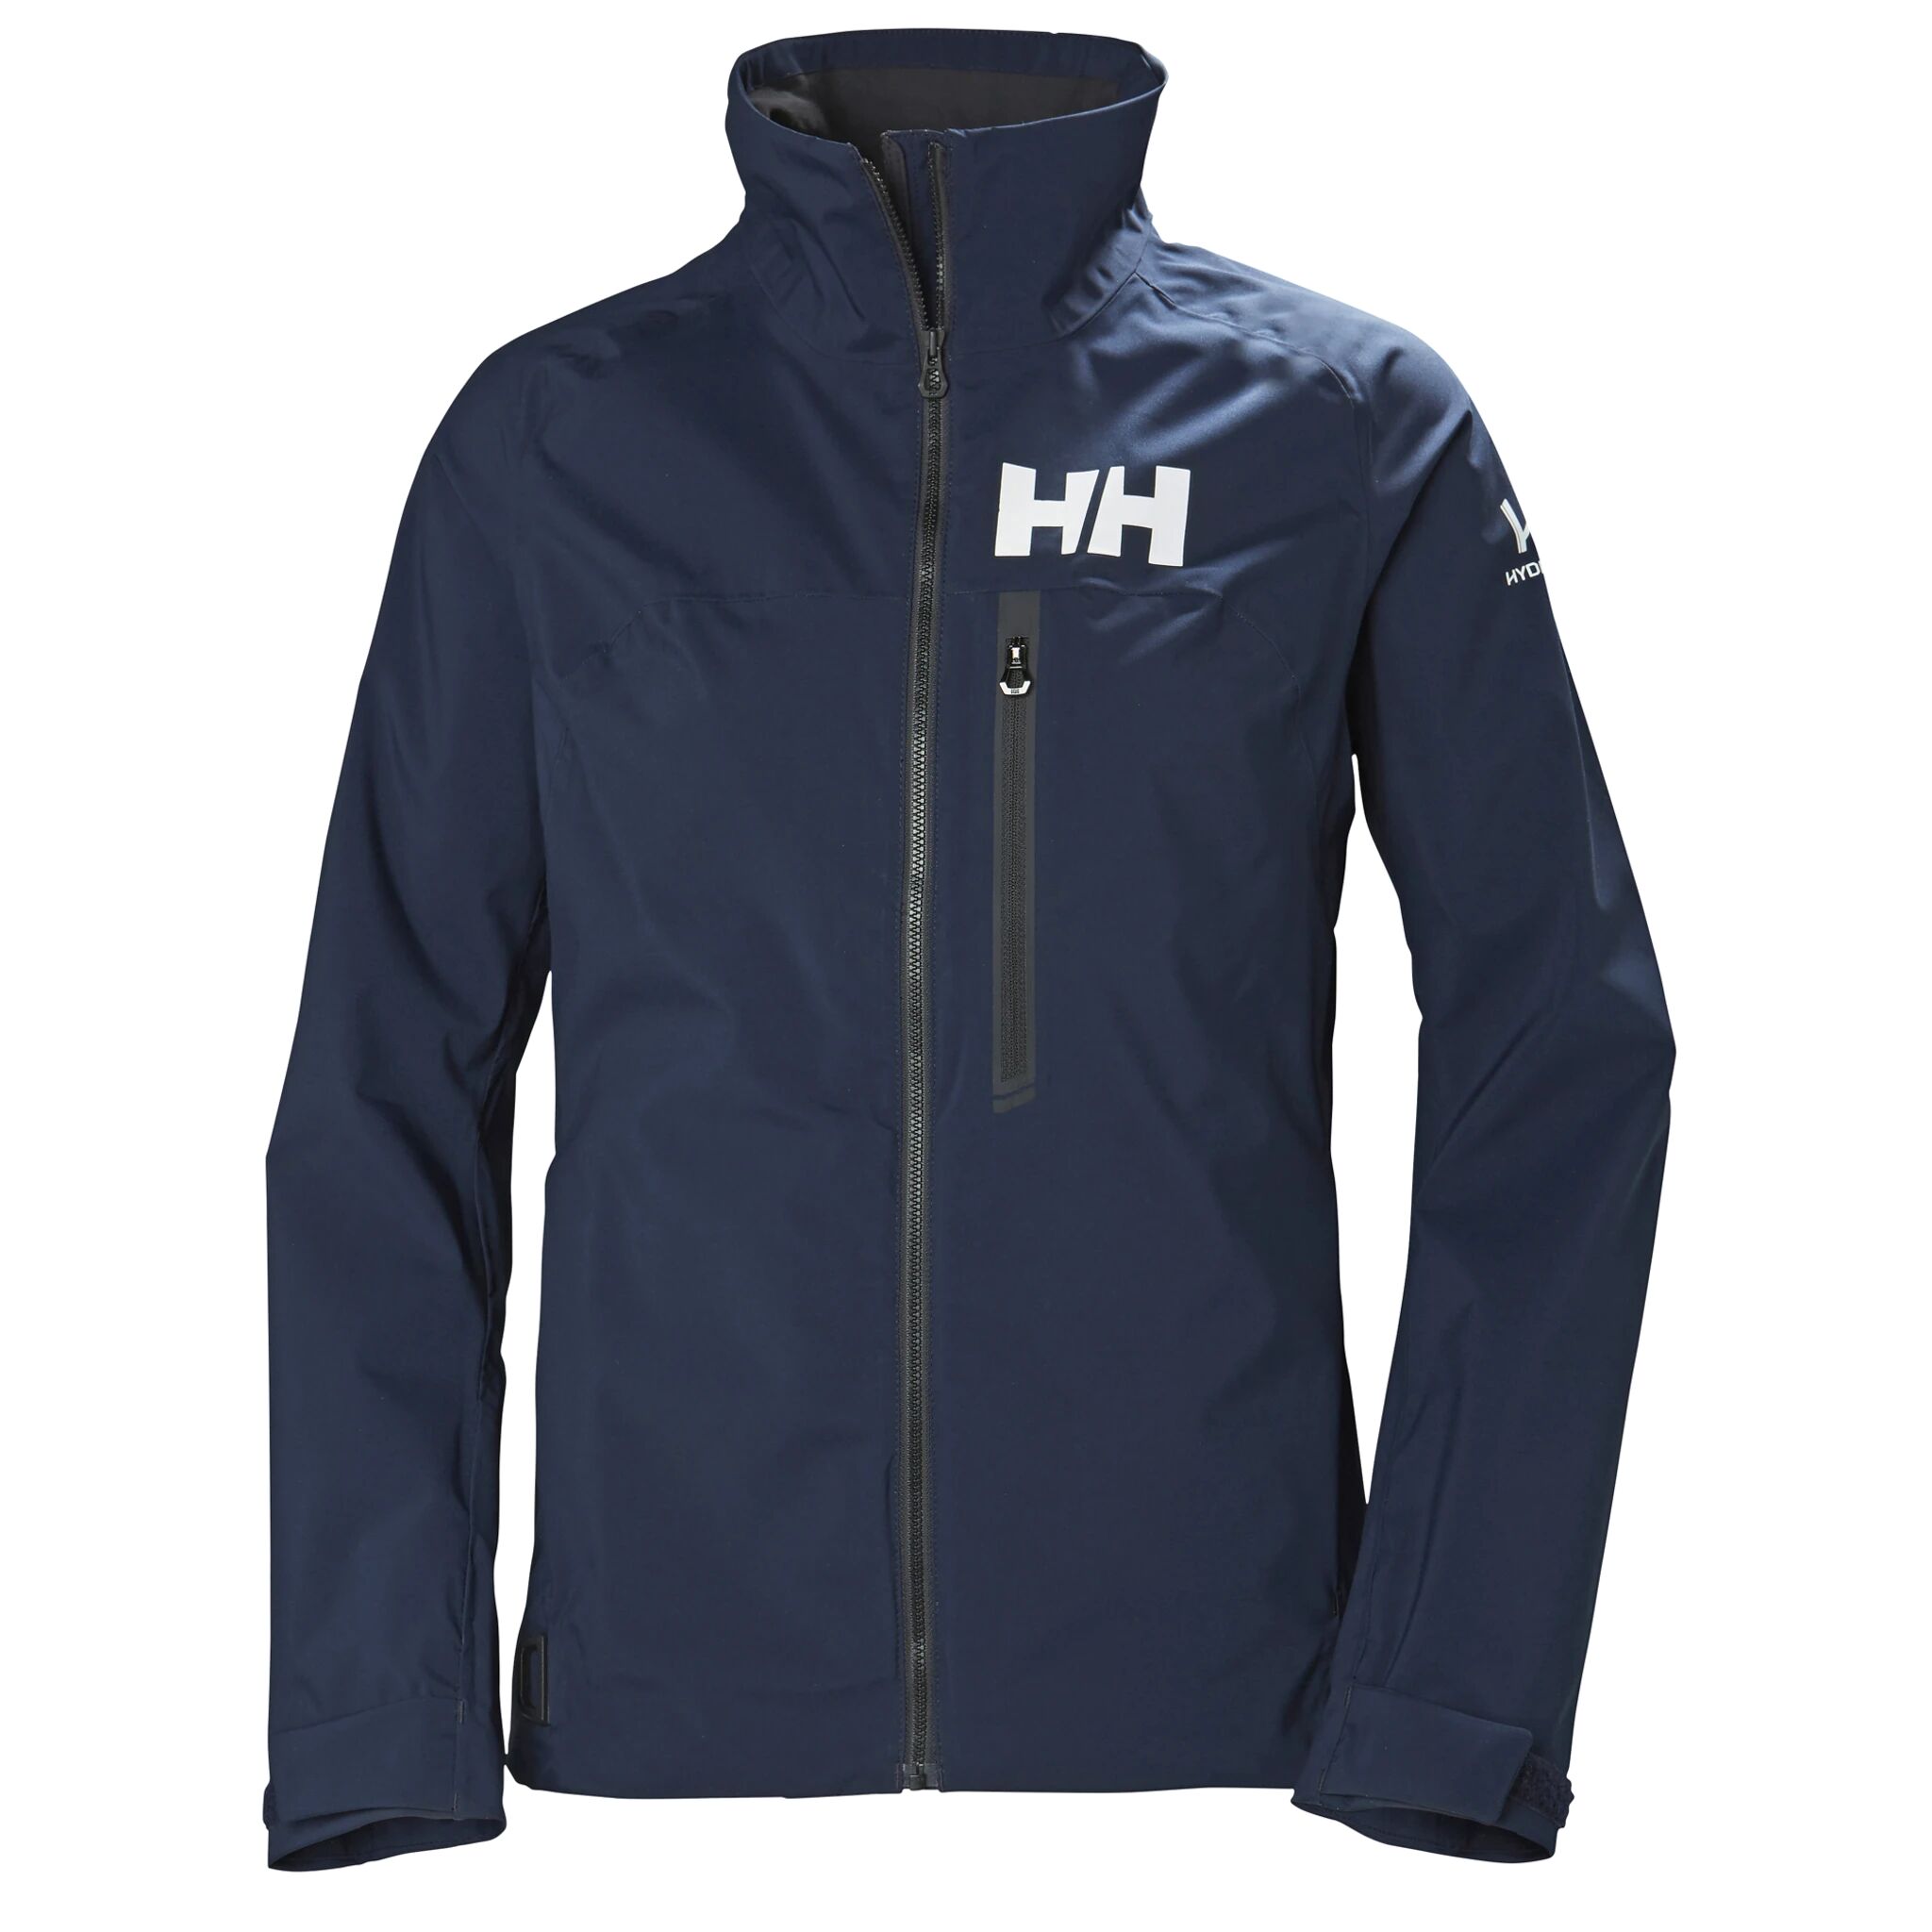 Helly Hansen HP Racing Jacket, seilerjakke dame S 597 NAVY